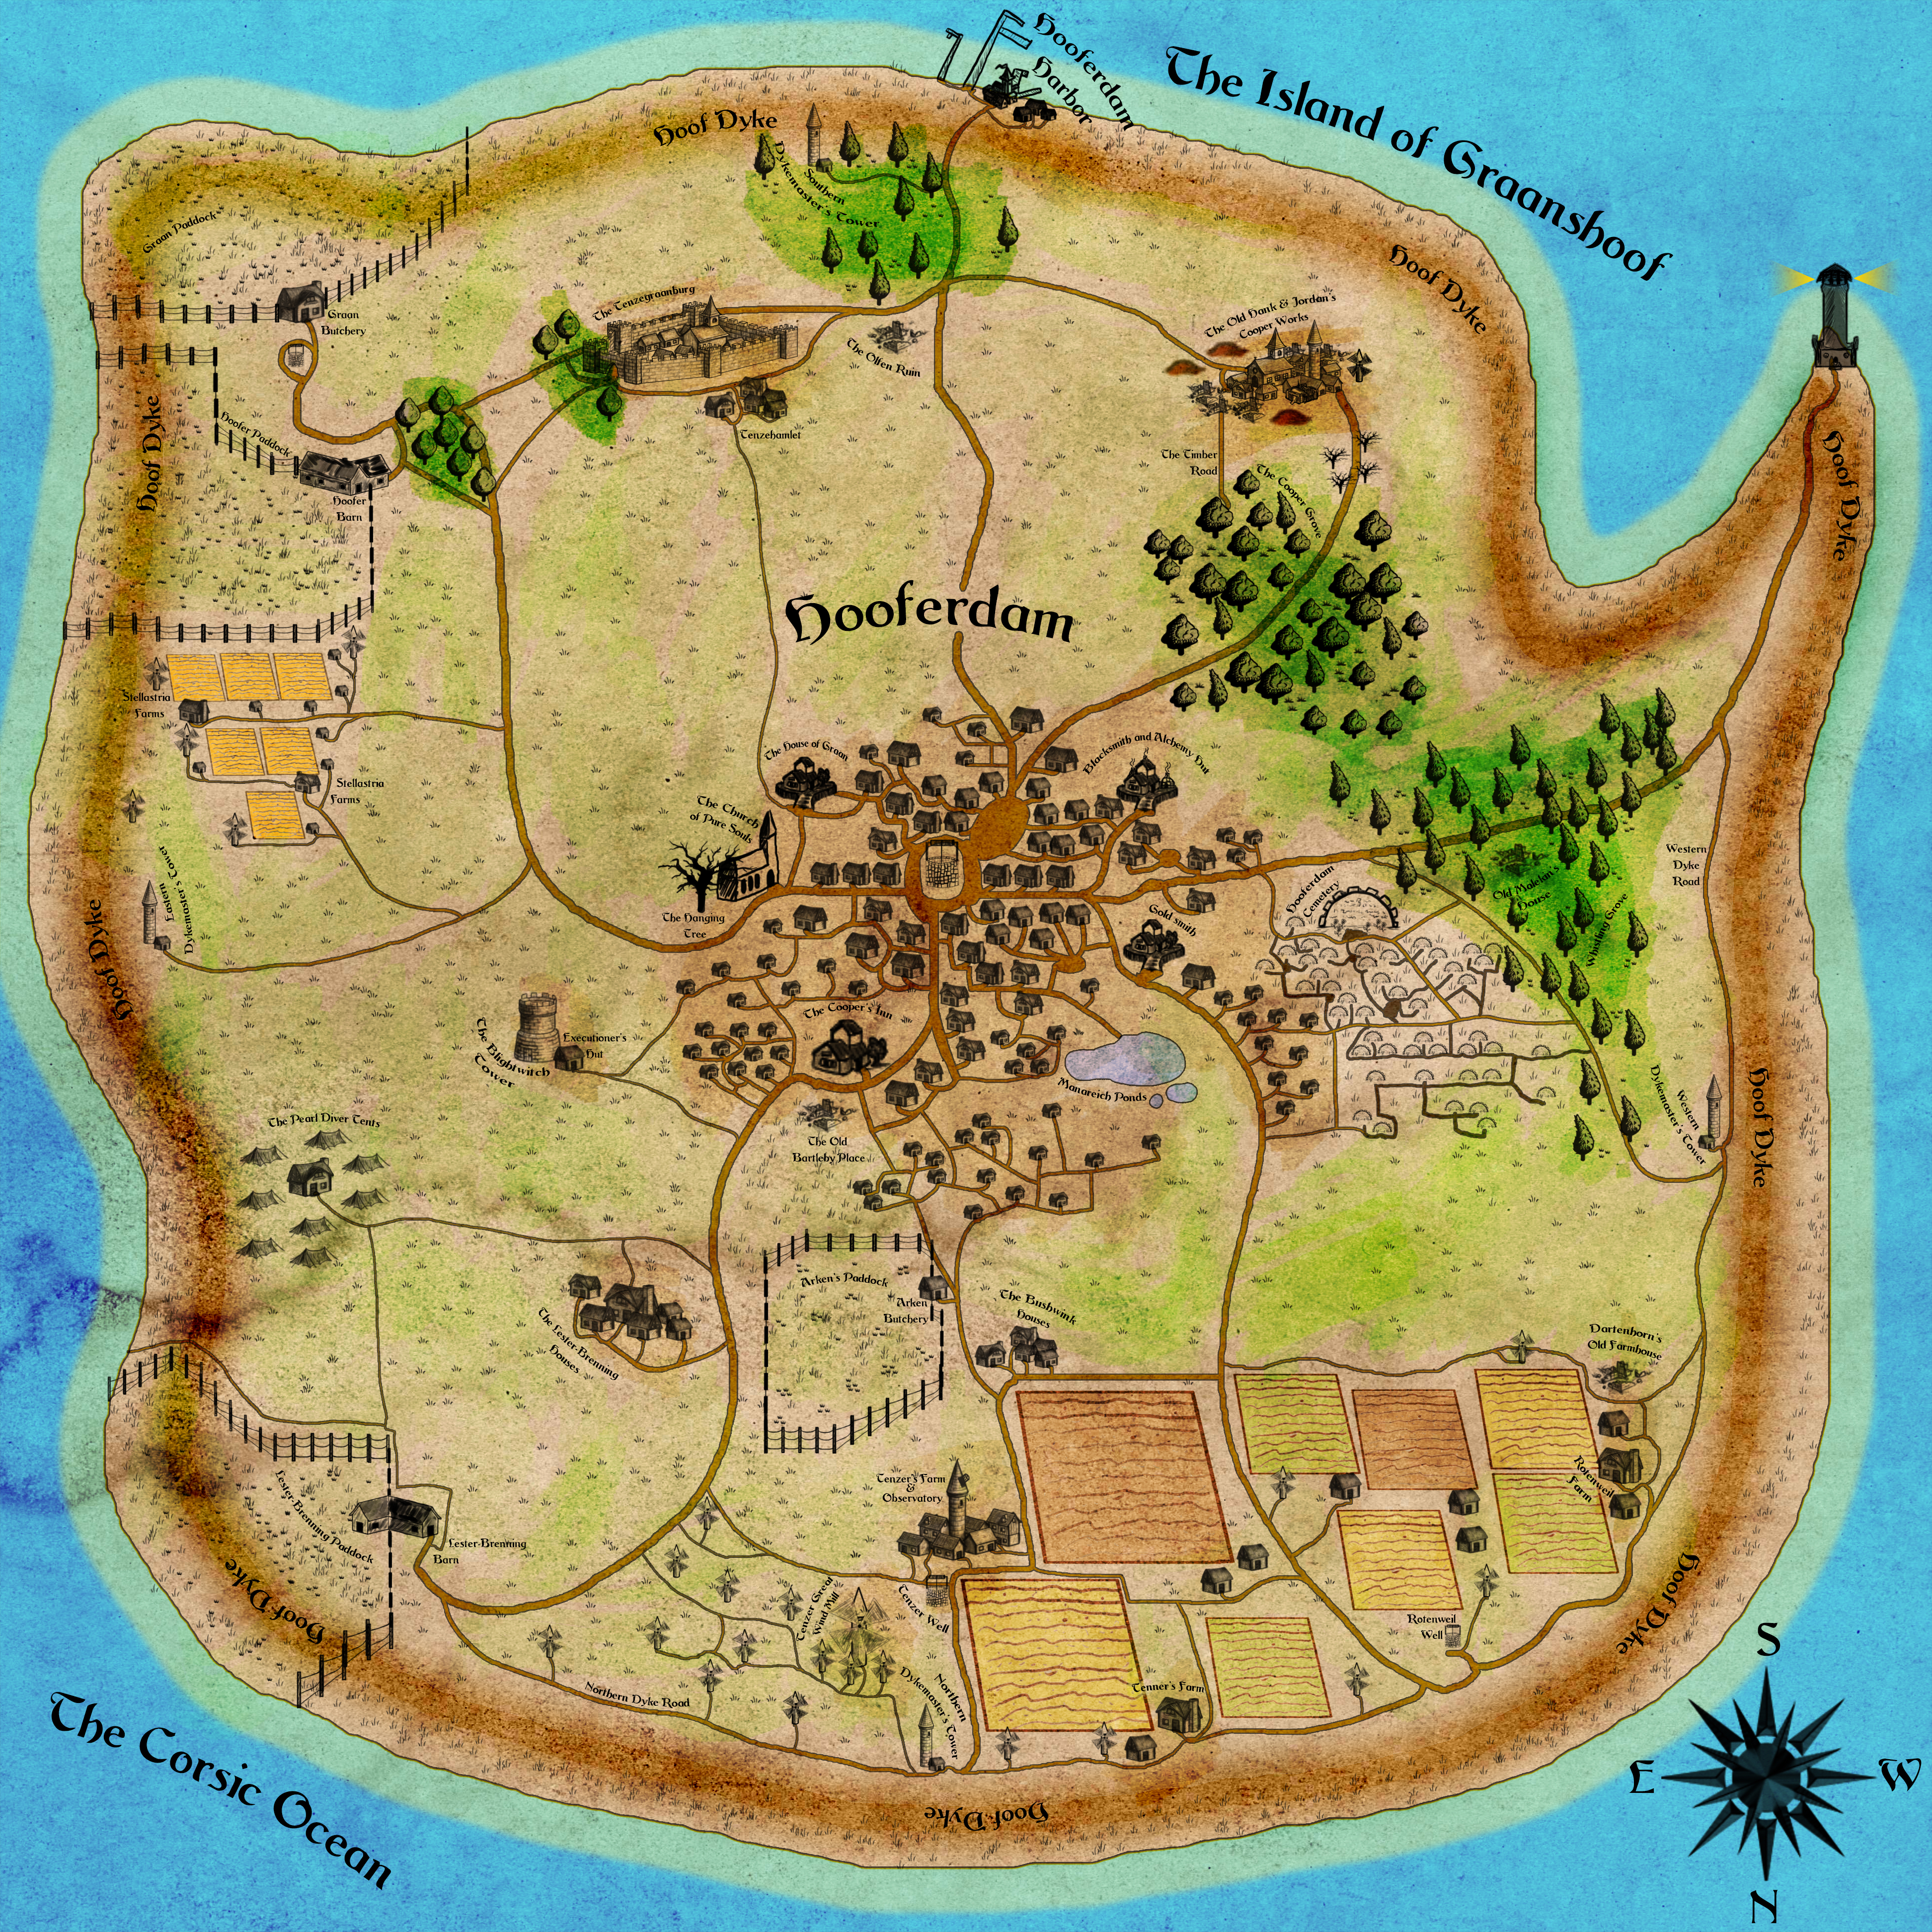 The Island of Graanshoof cover